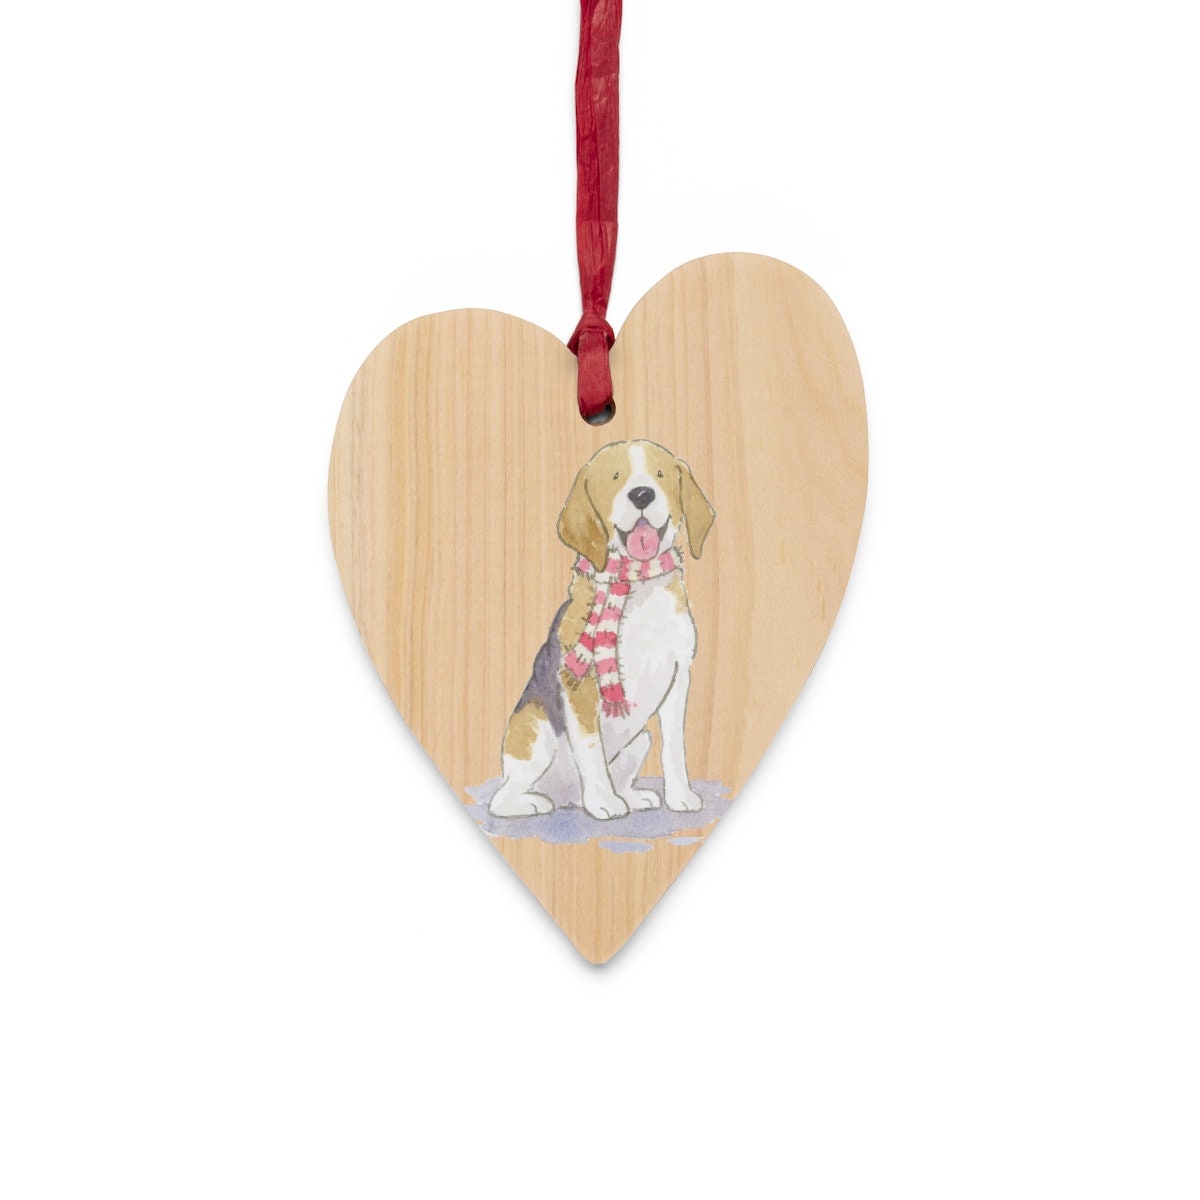 Beagle Ornament, Rustic Wood Ornament, Beagle Gift, Beagle Lover Gift, Personalized Beagle Ornament, Stocking Stuffer, Cute Dog Ornament